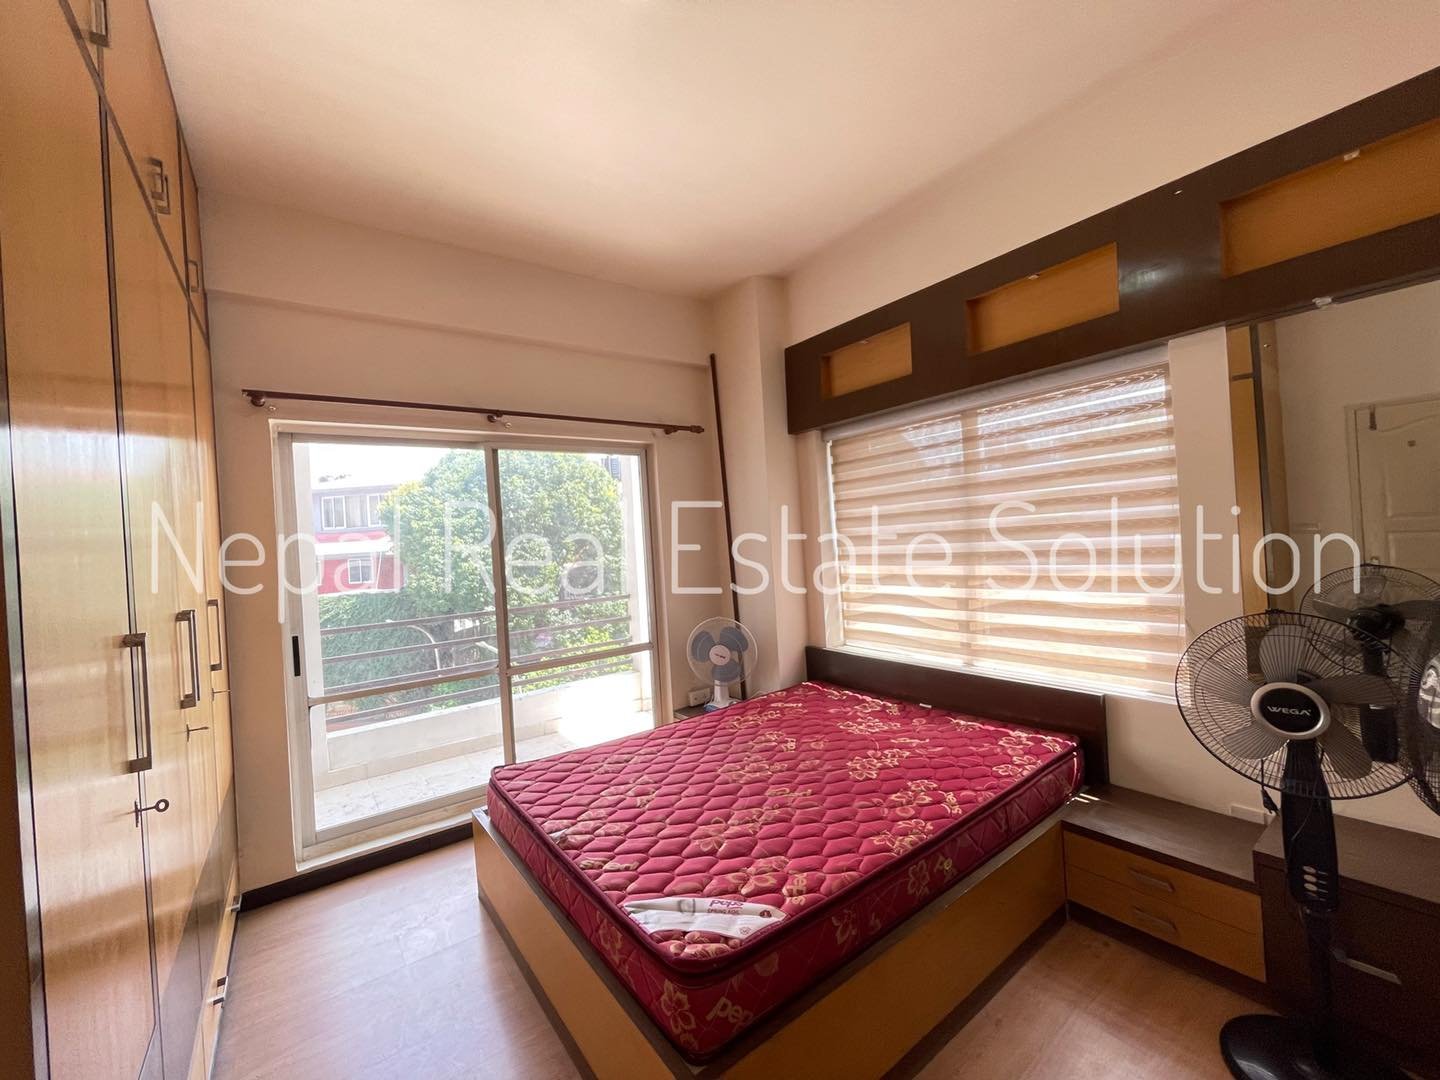 3BHK Full Furnished Apartment For Rent In Jhamshikhel